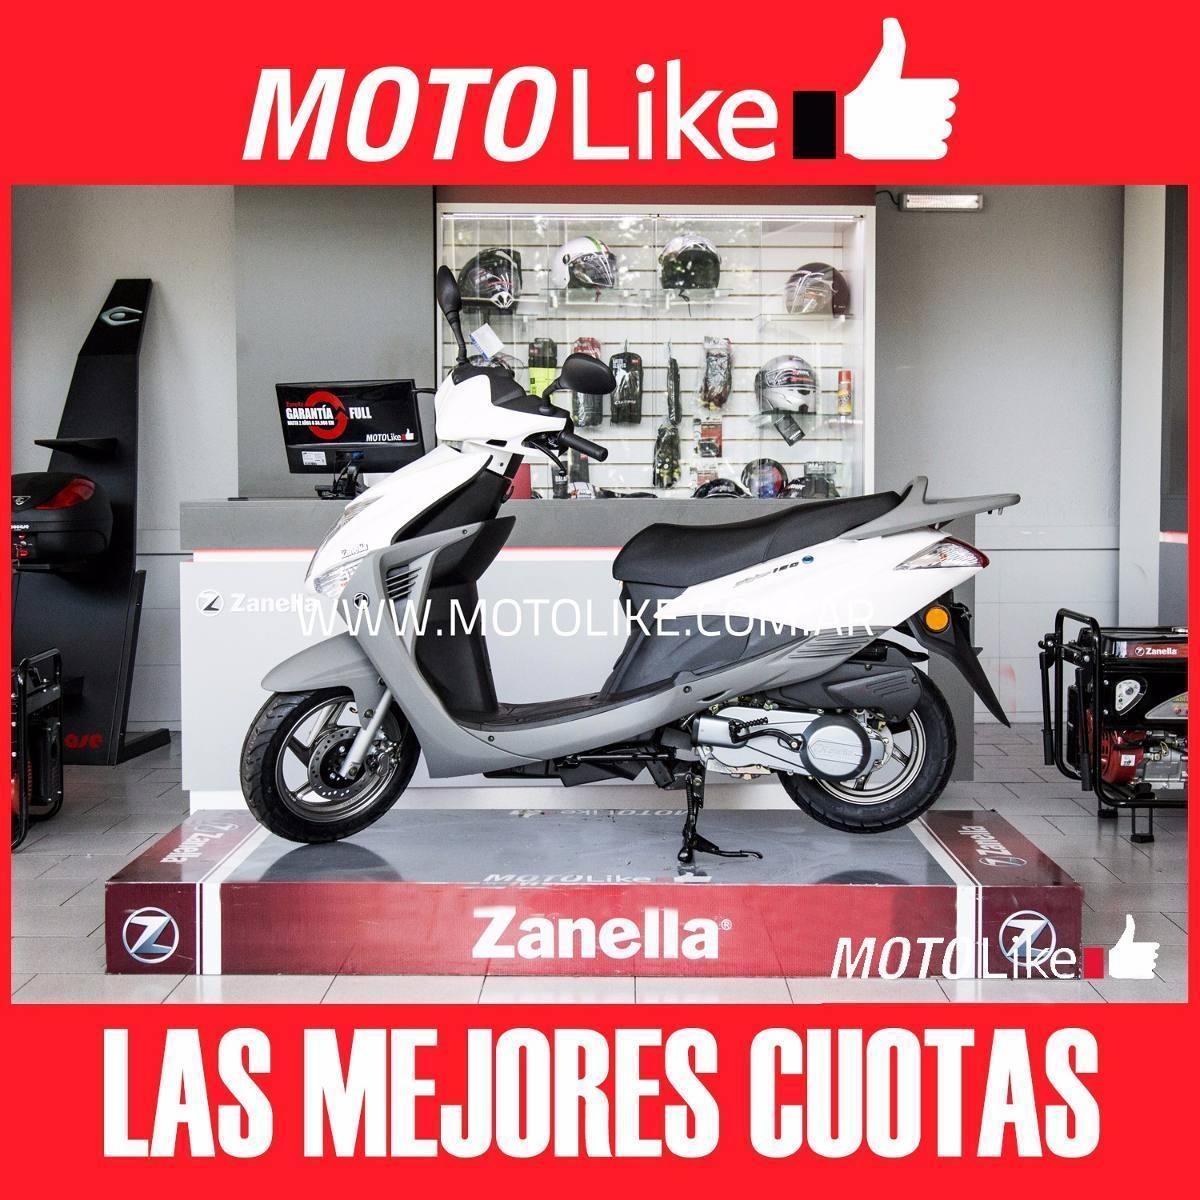 Zanella Styler Lt 150 Nuevo Modelo 2017 Moto Like 0km